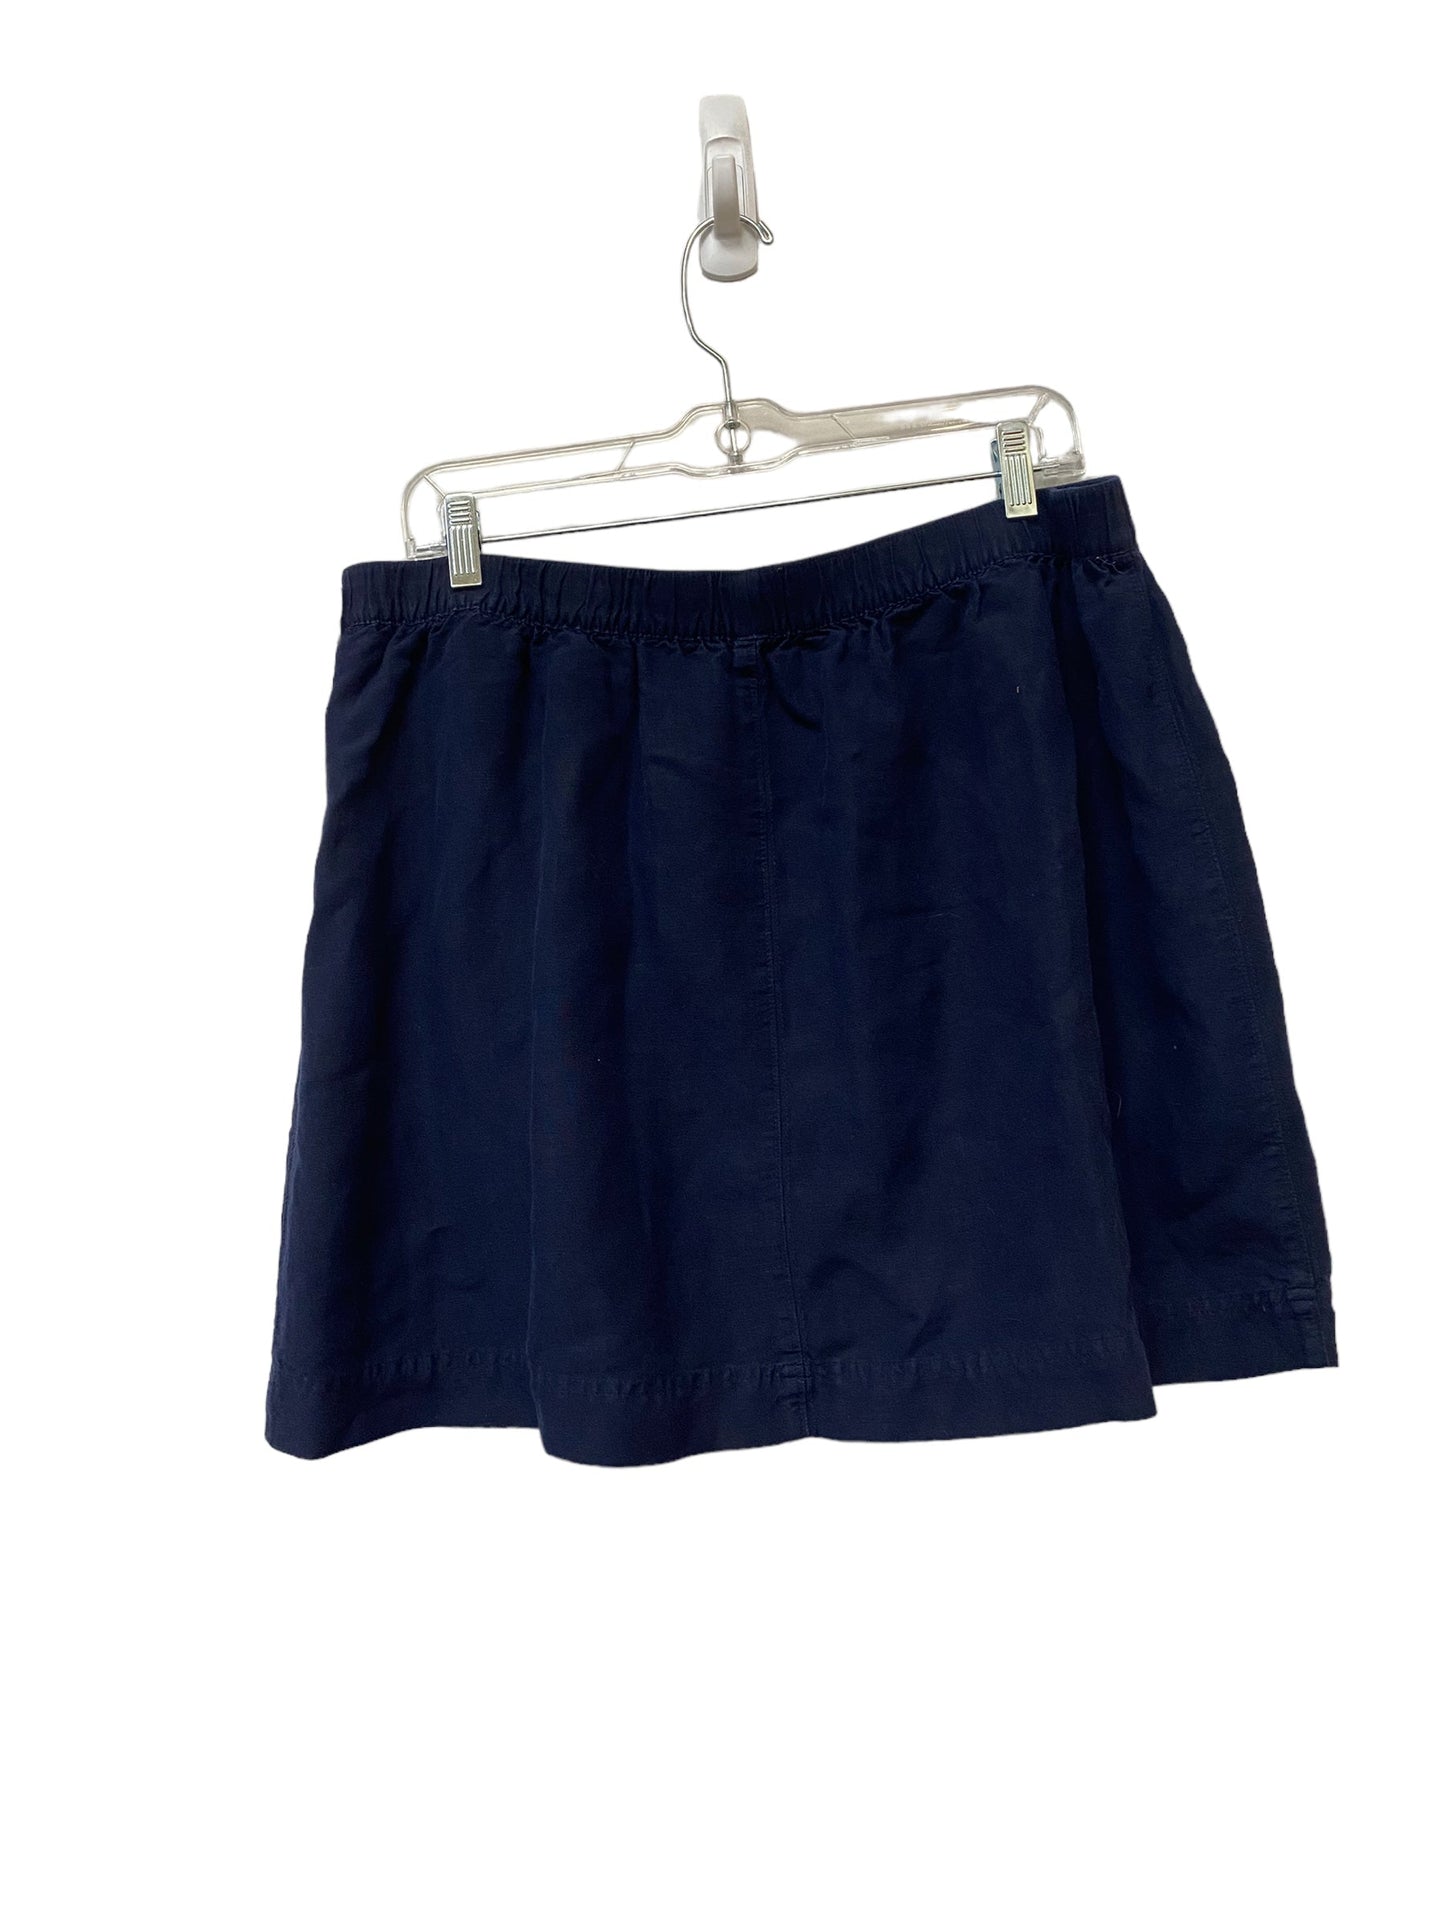 Skirt Midi By Merona  Size: L